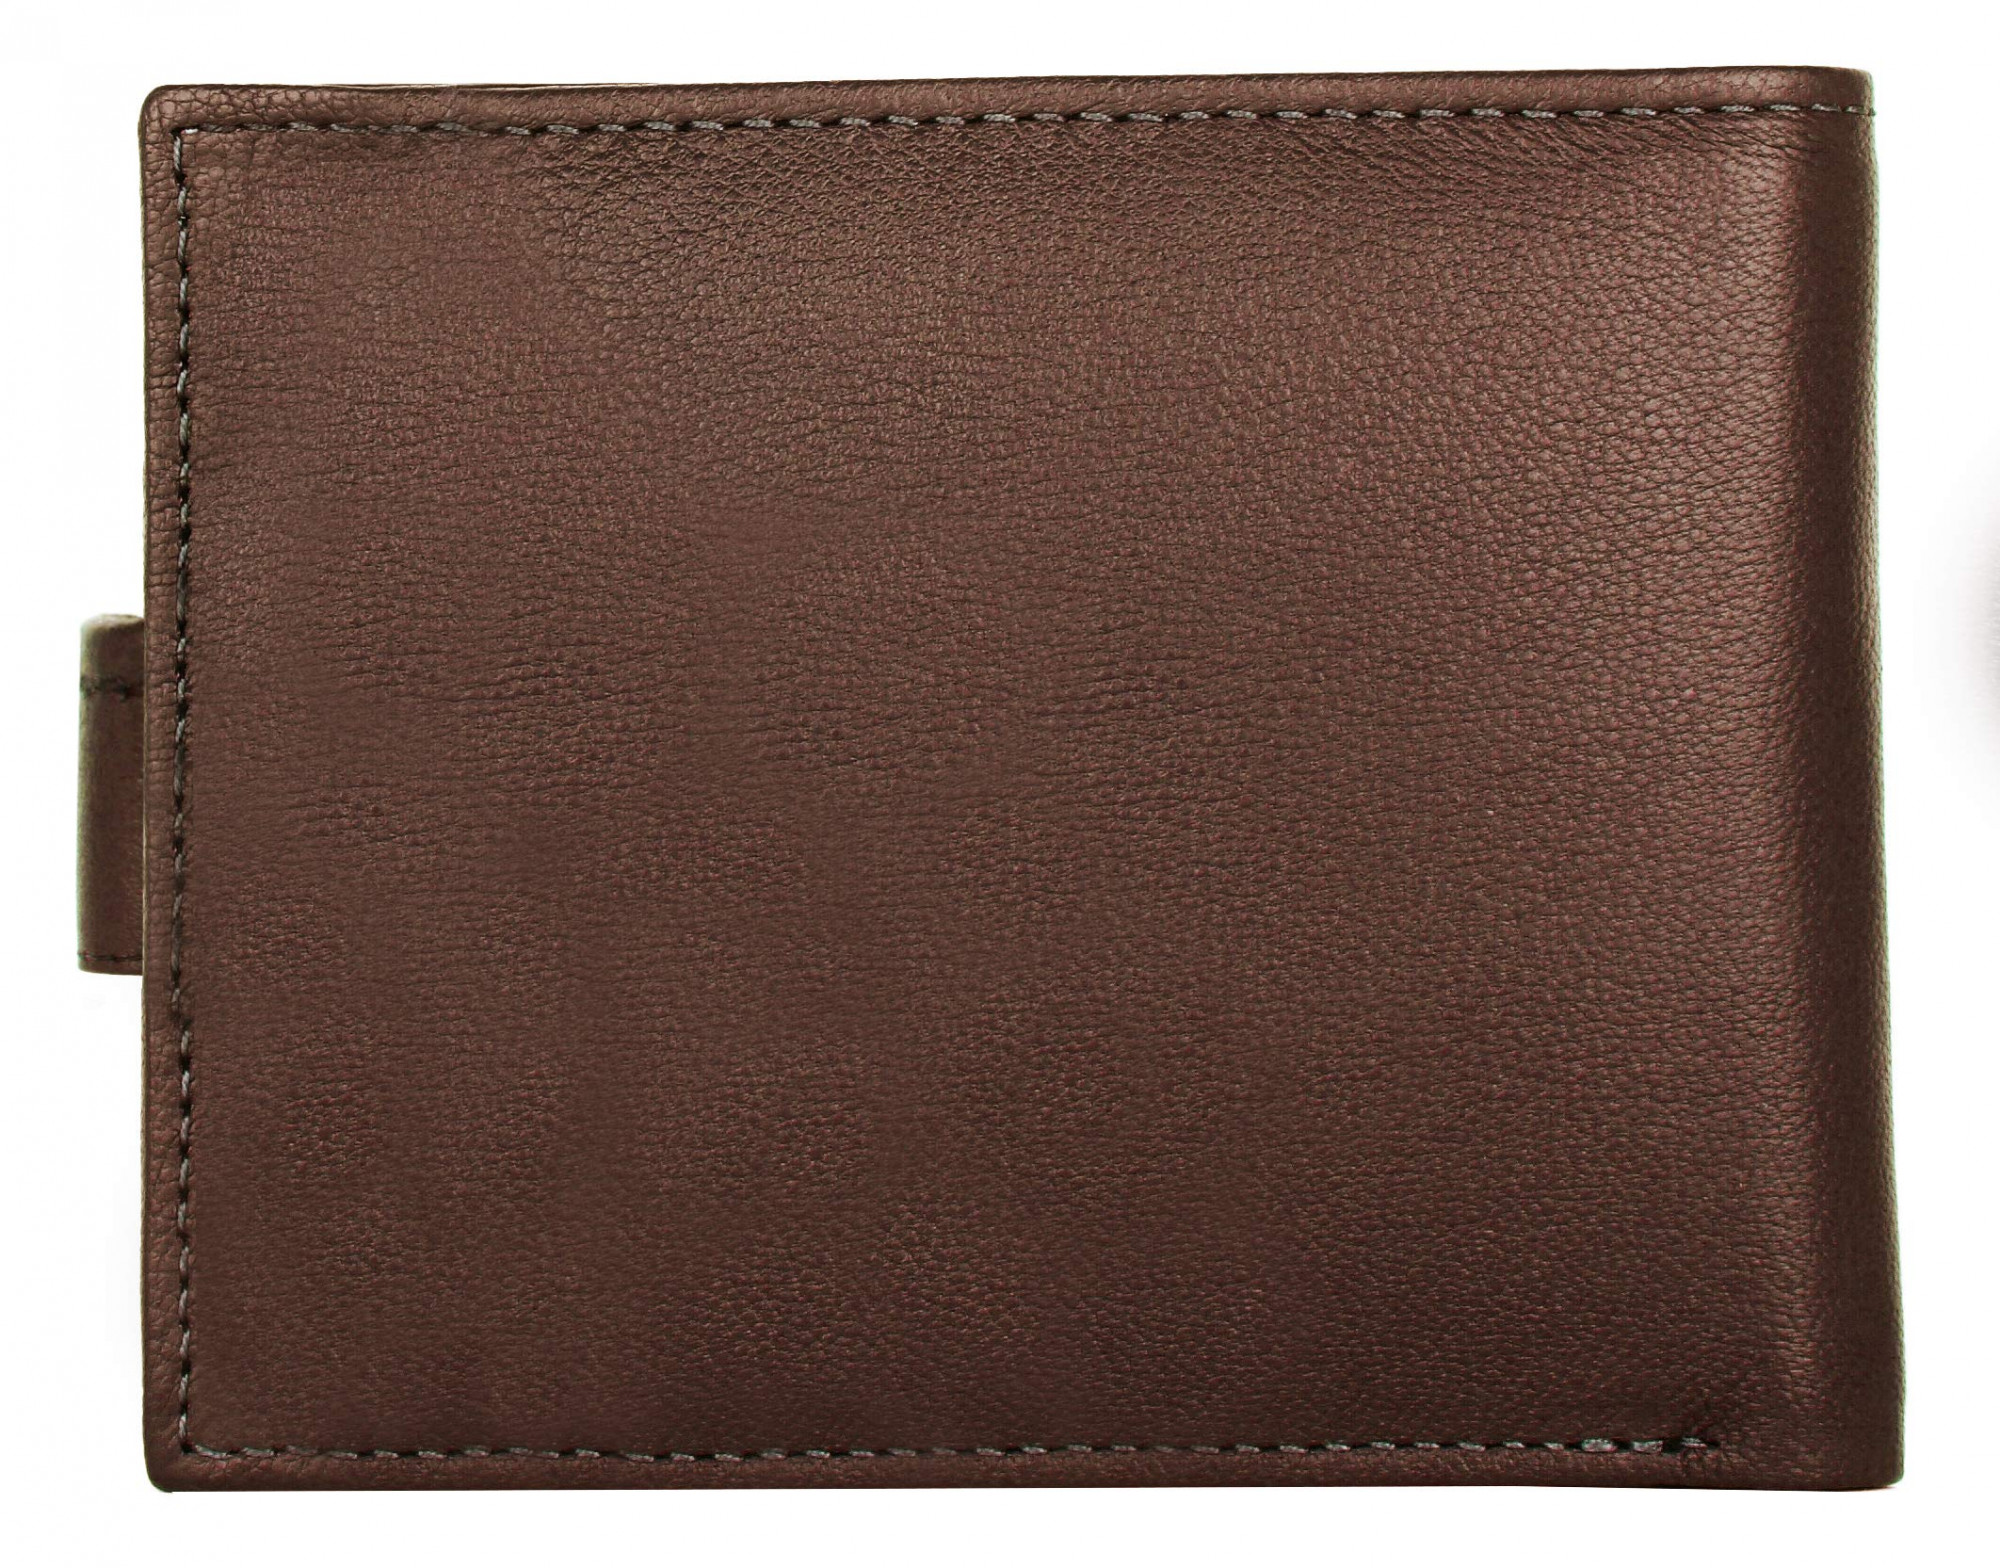 WildHorn Brown Leather Wallet for Men